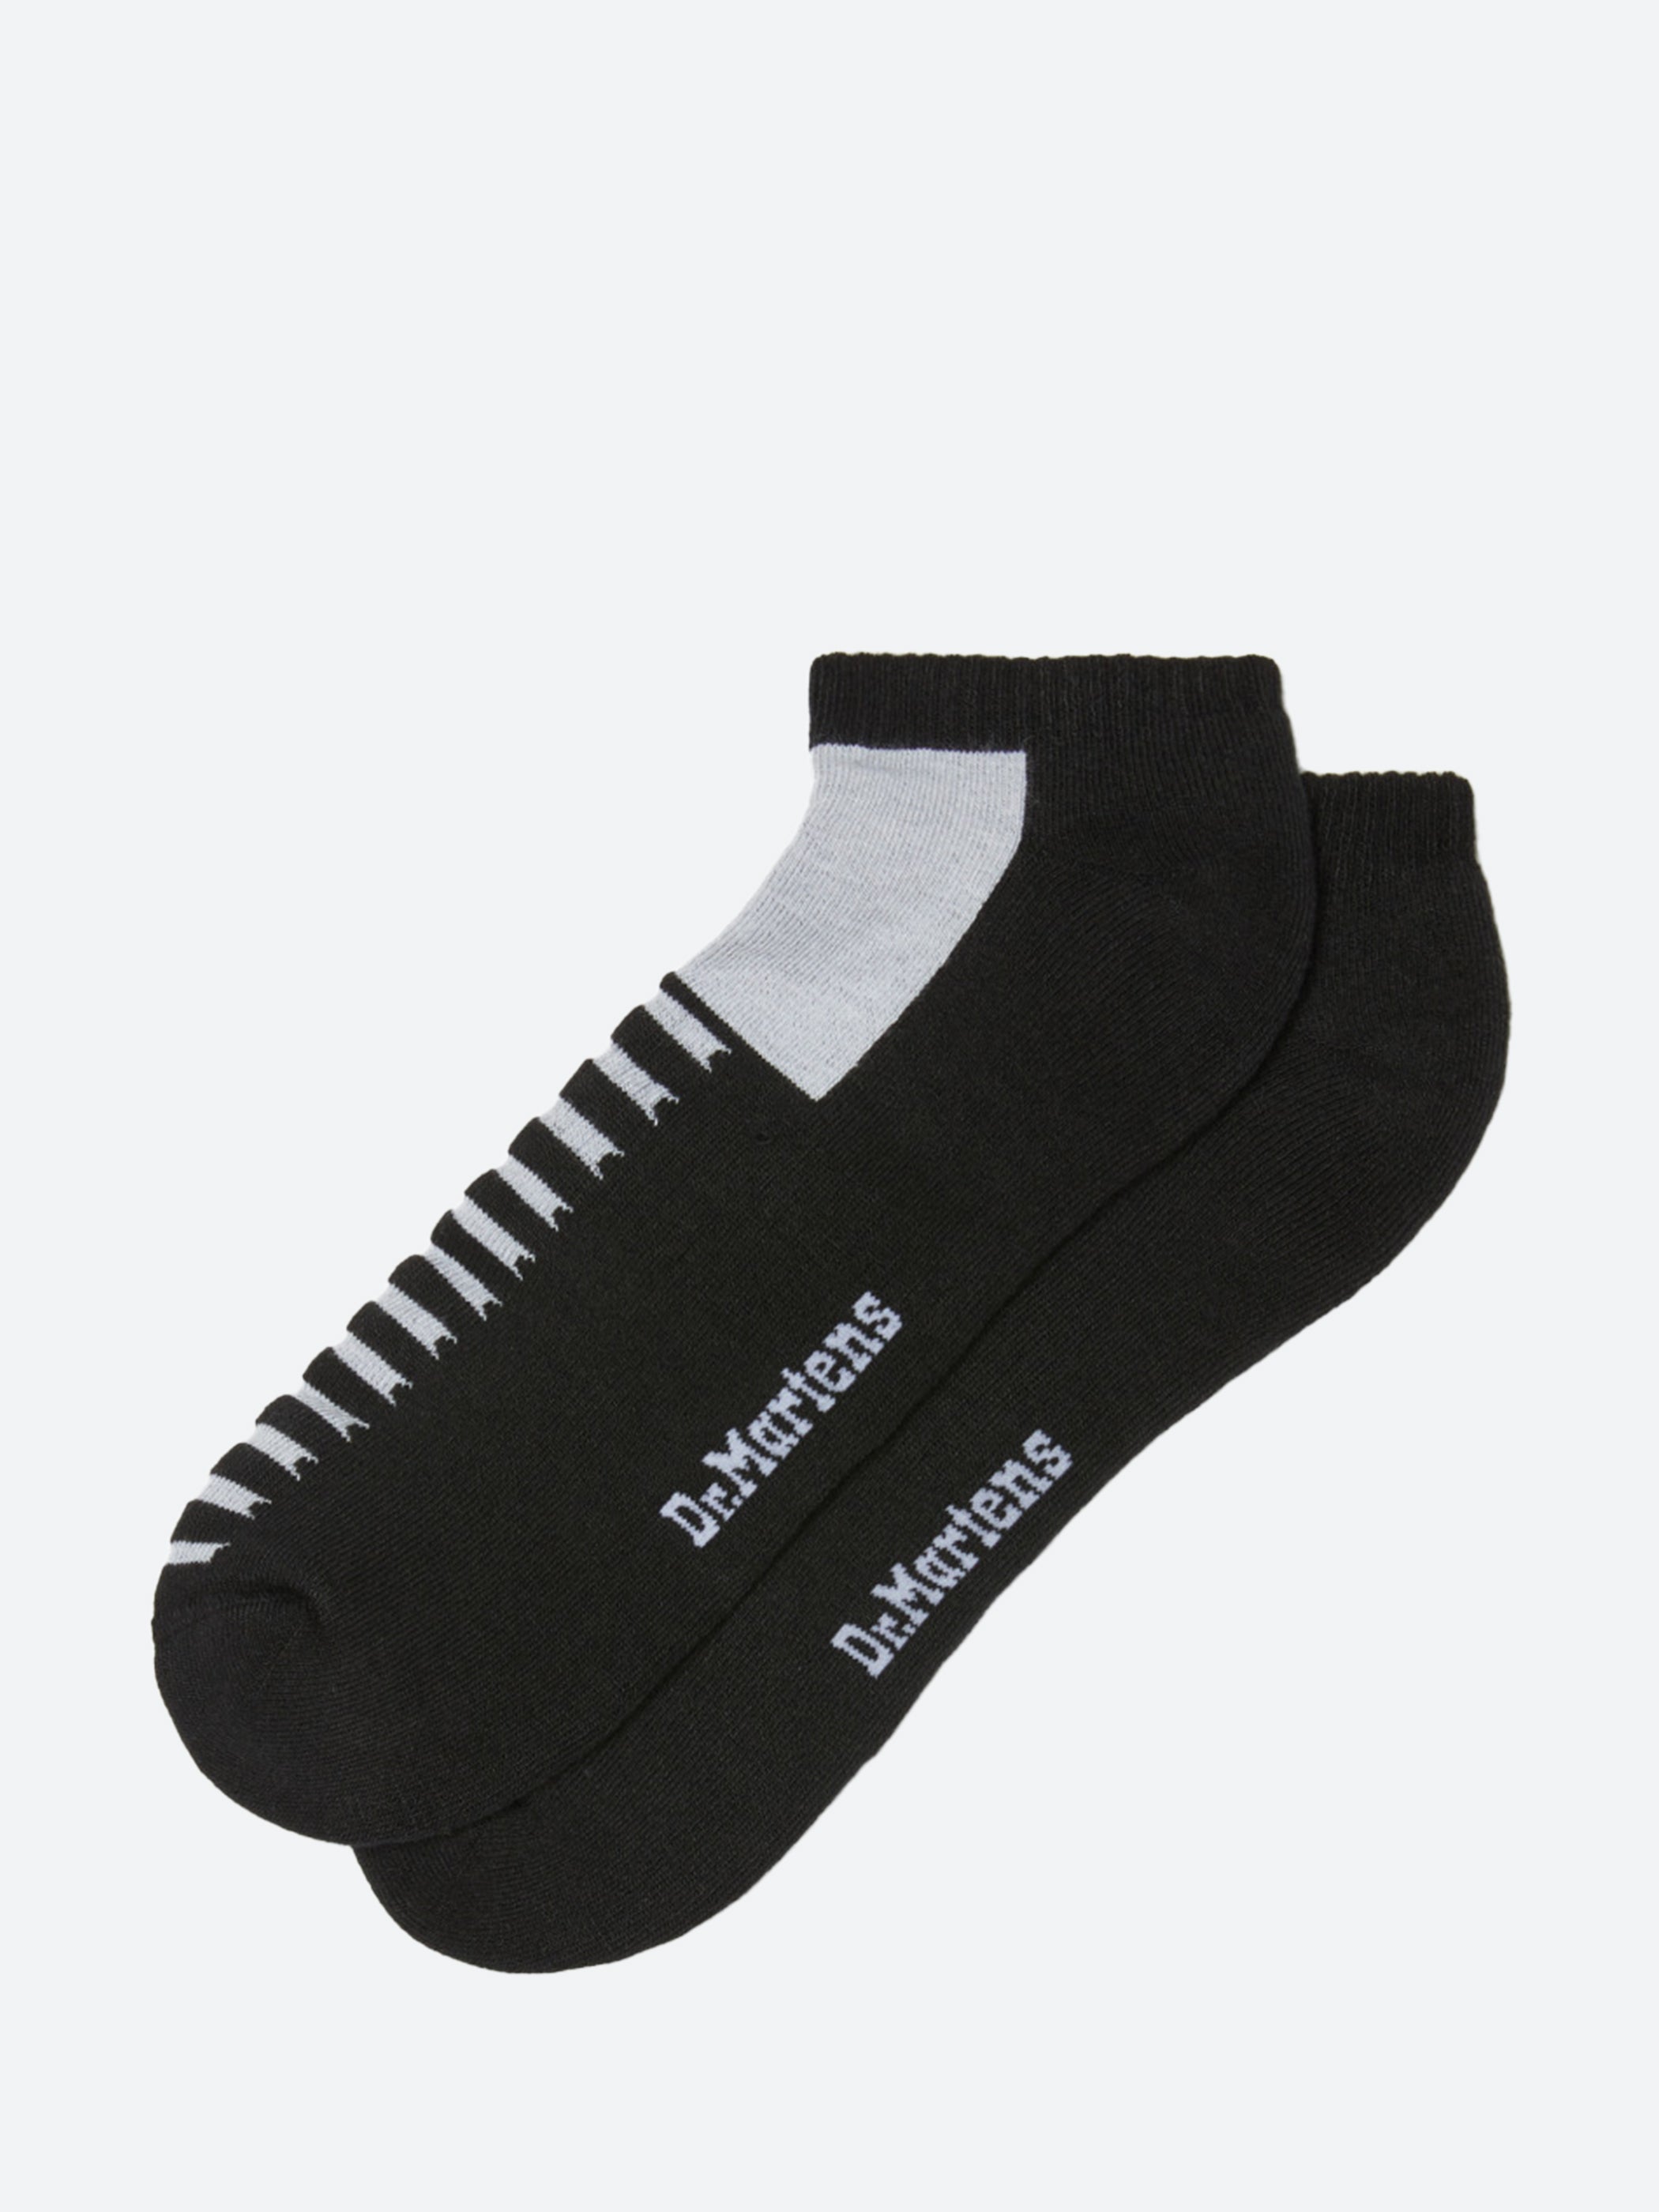 Double Doc Cotton Blend Short 2-Pack Socks